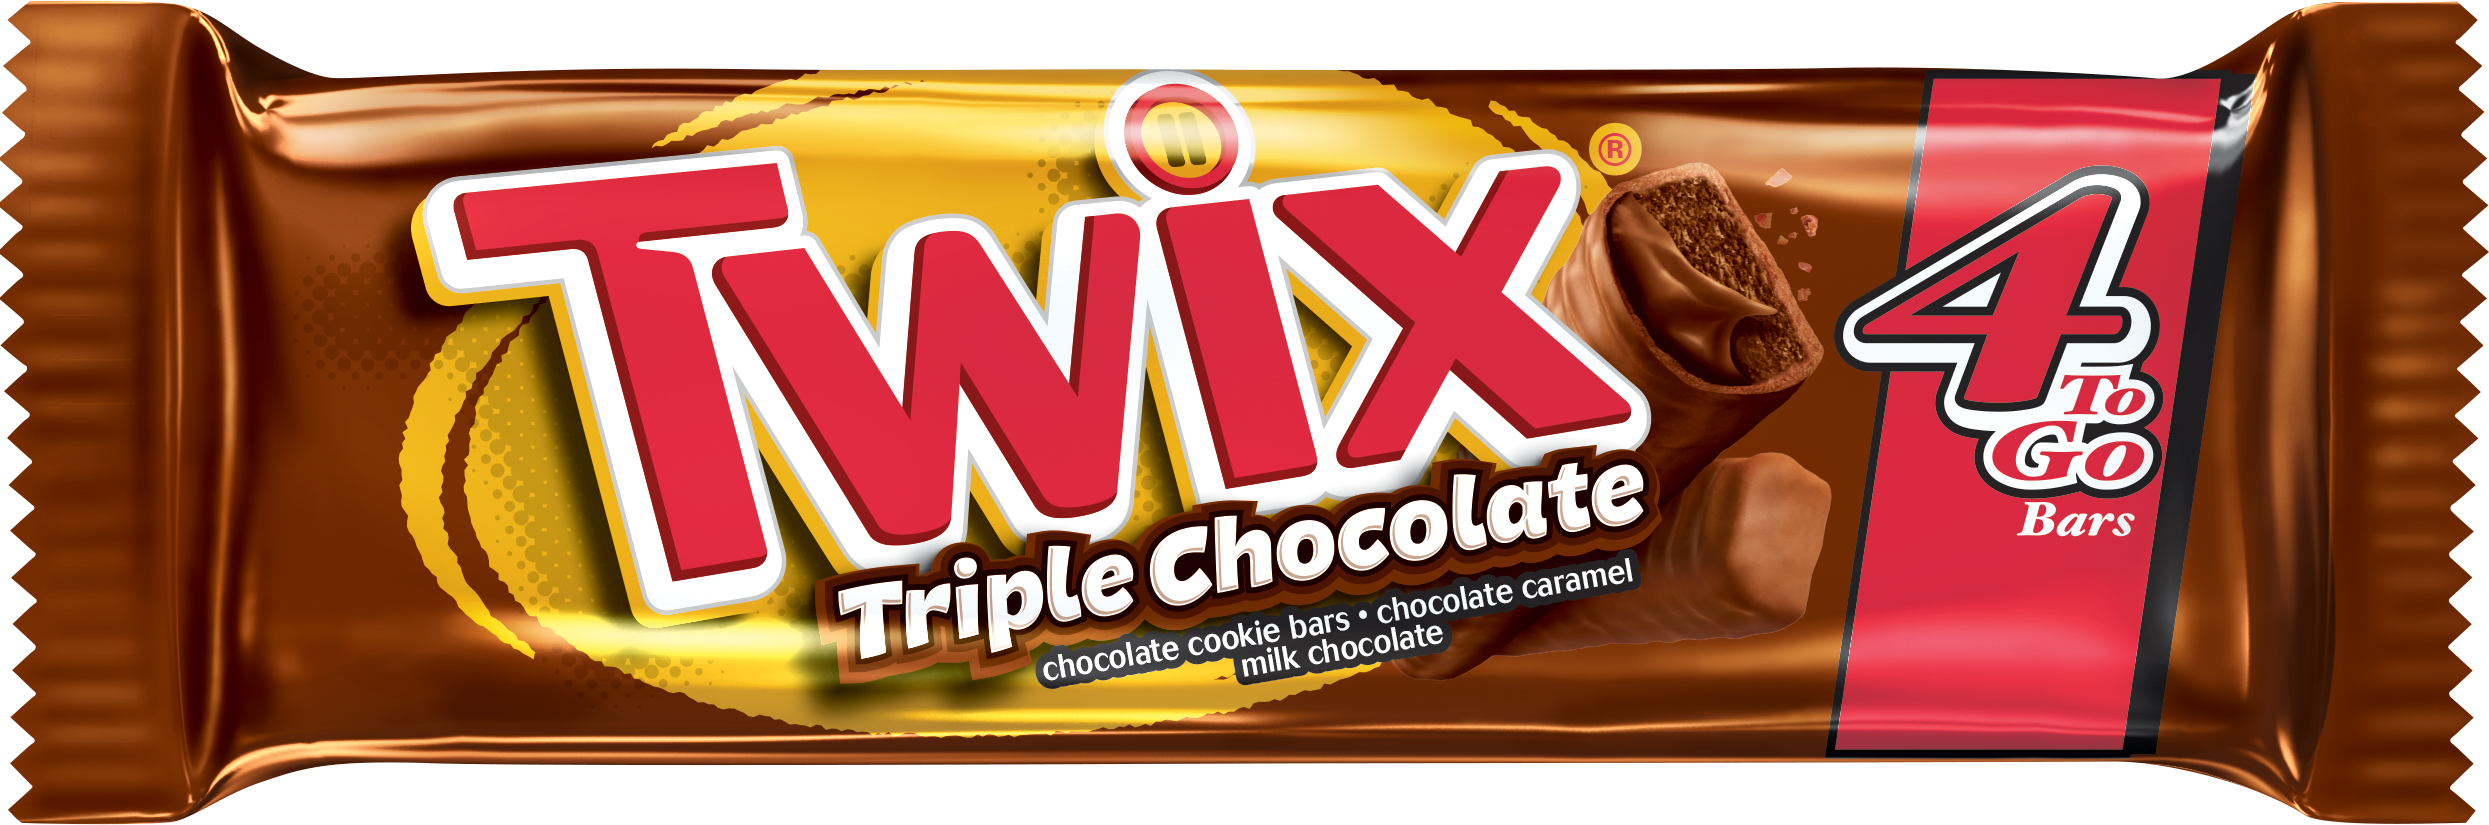 Twix Cookie Bars Transparent Image